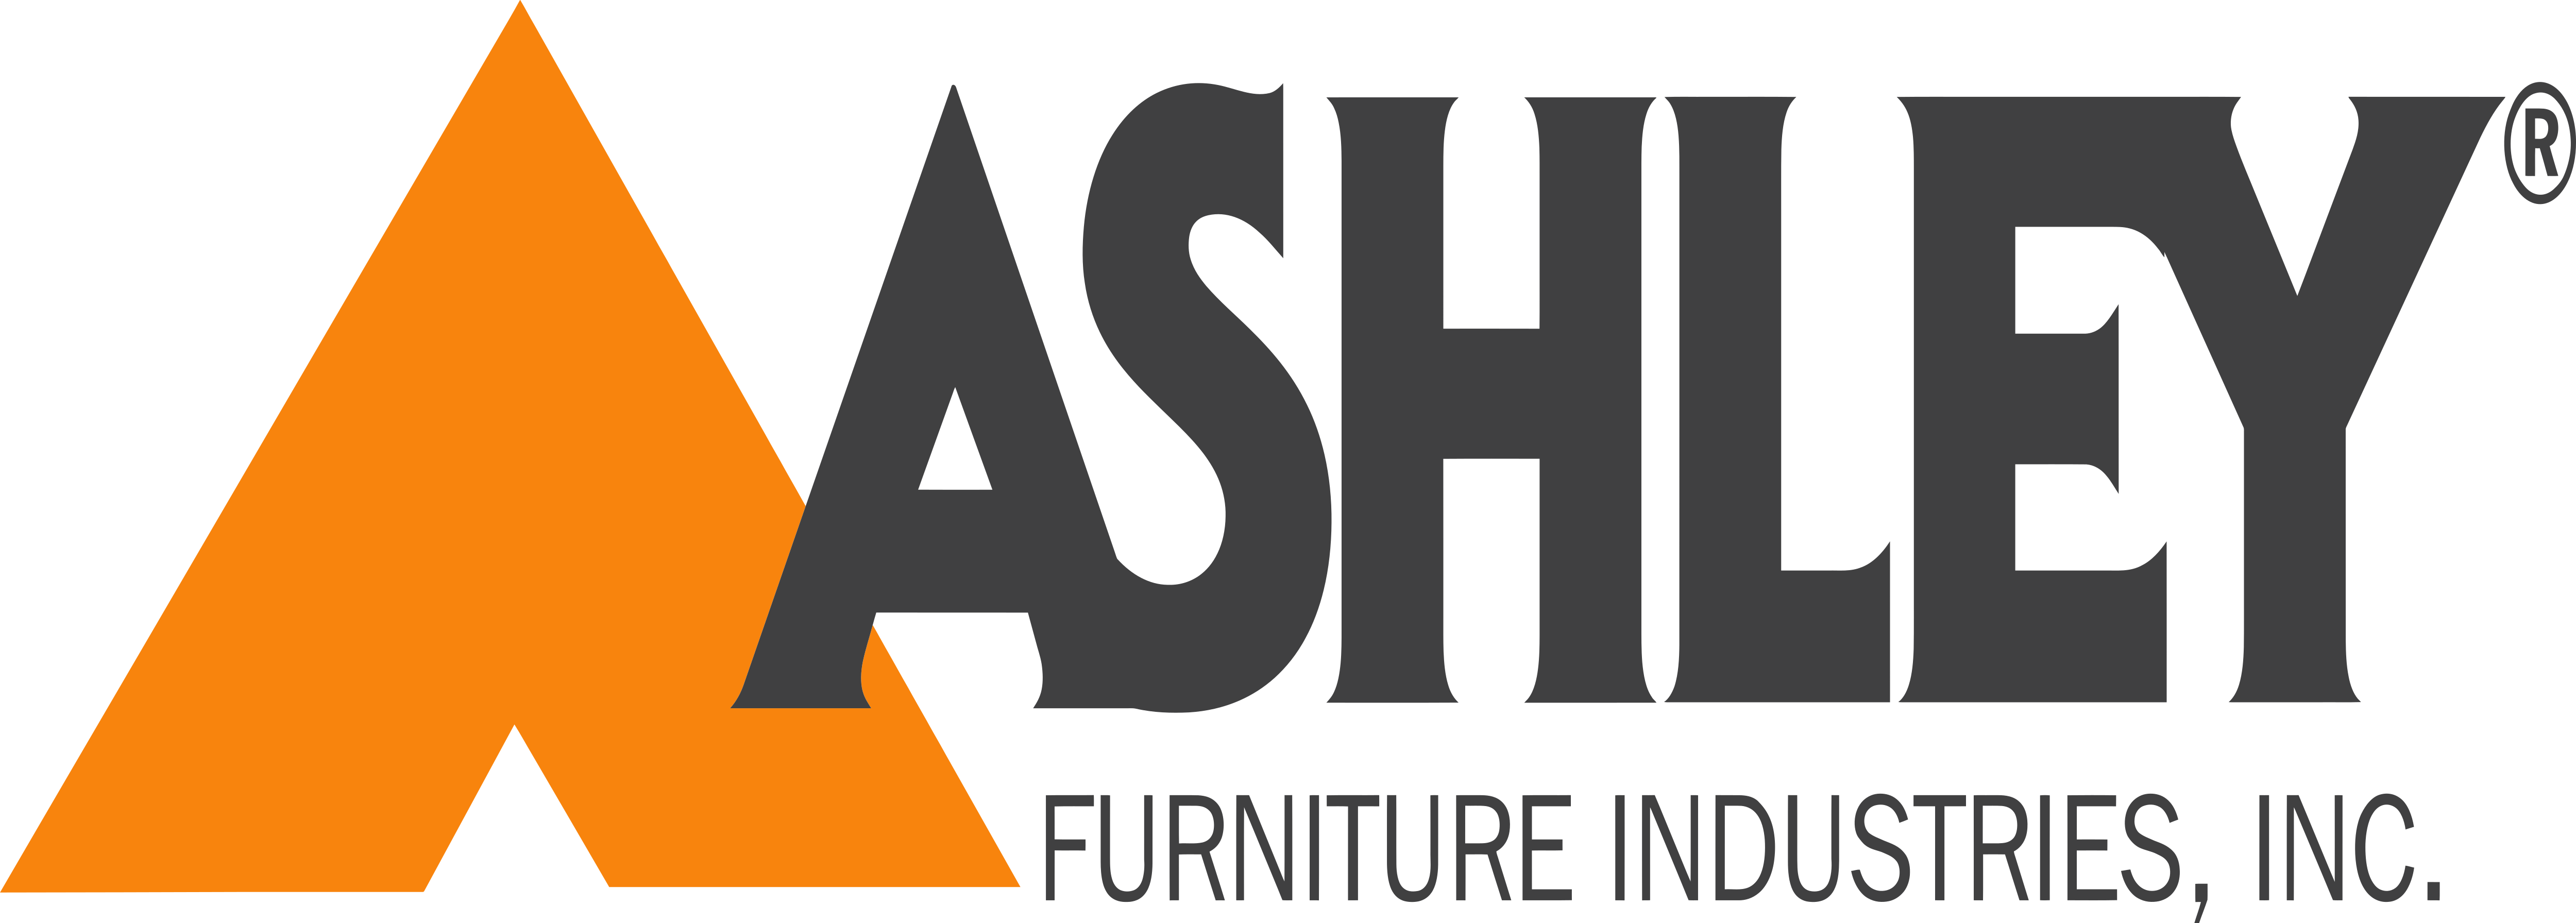 Ashley Logo - Ashley Furniture – Logos Download